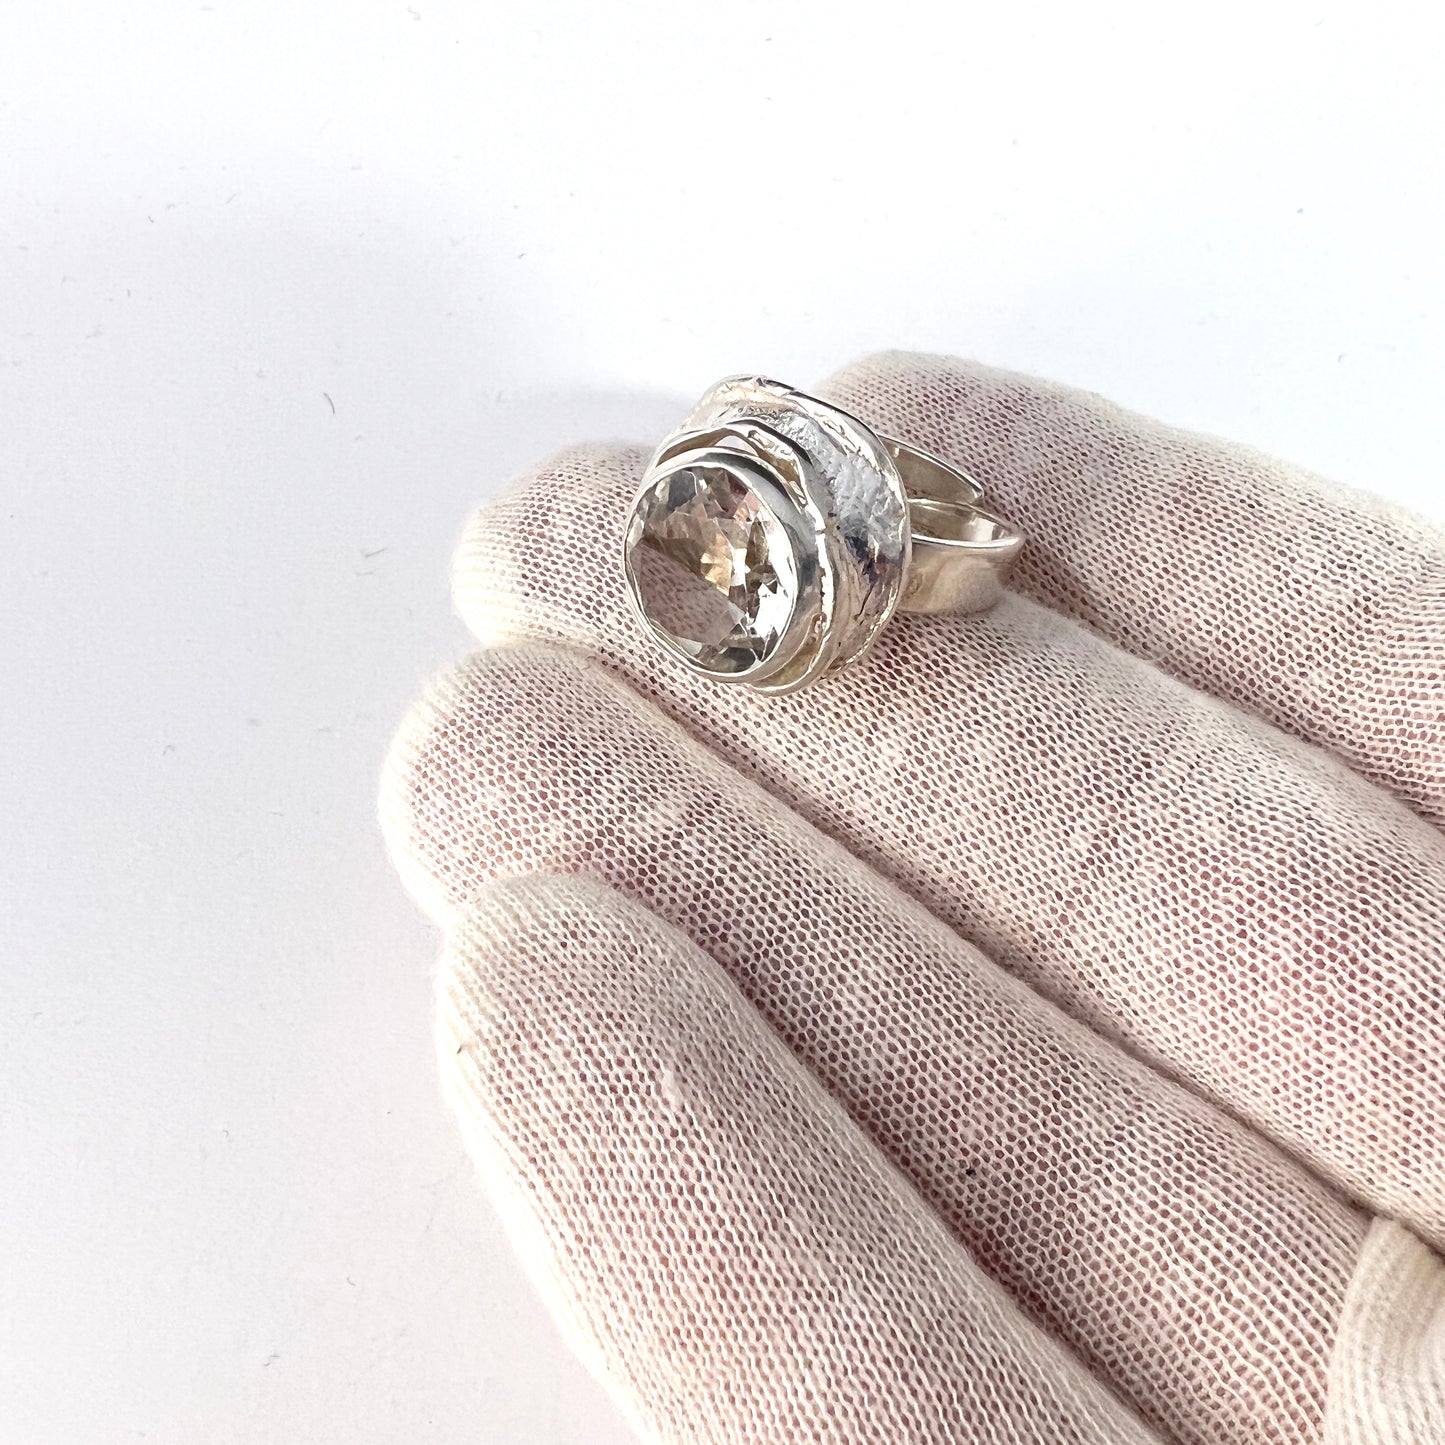 Raimo Keskinen, Finland 1970s. Solid Silver Rock Crystal Ring. Adjustable Size.